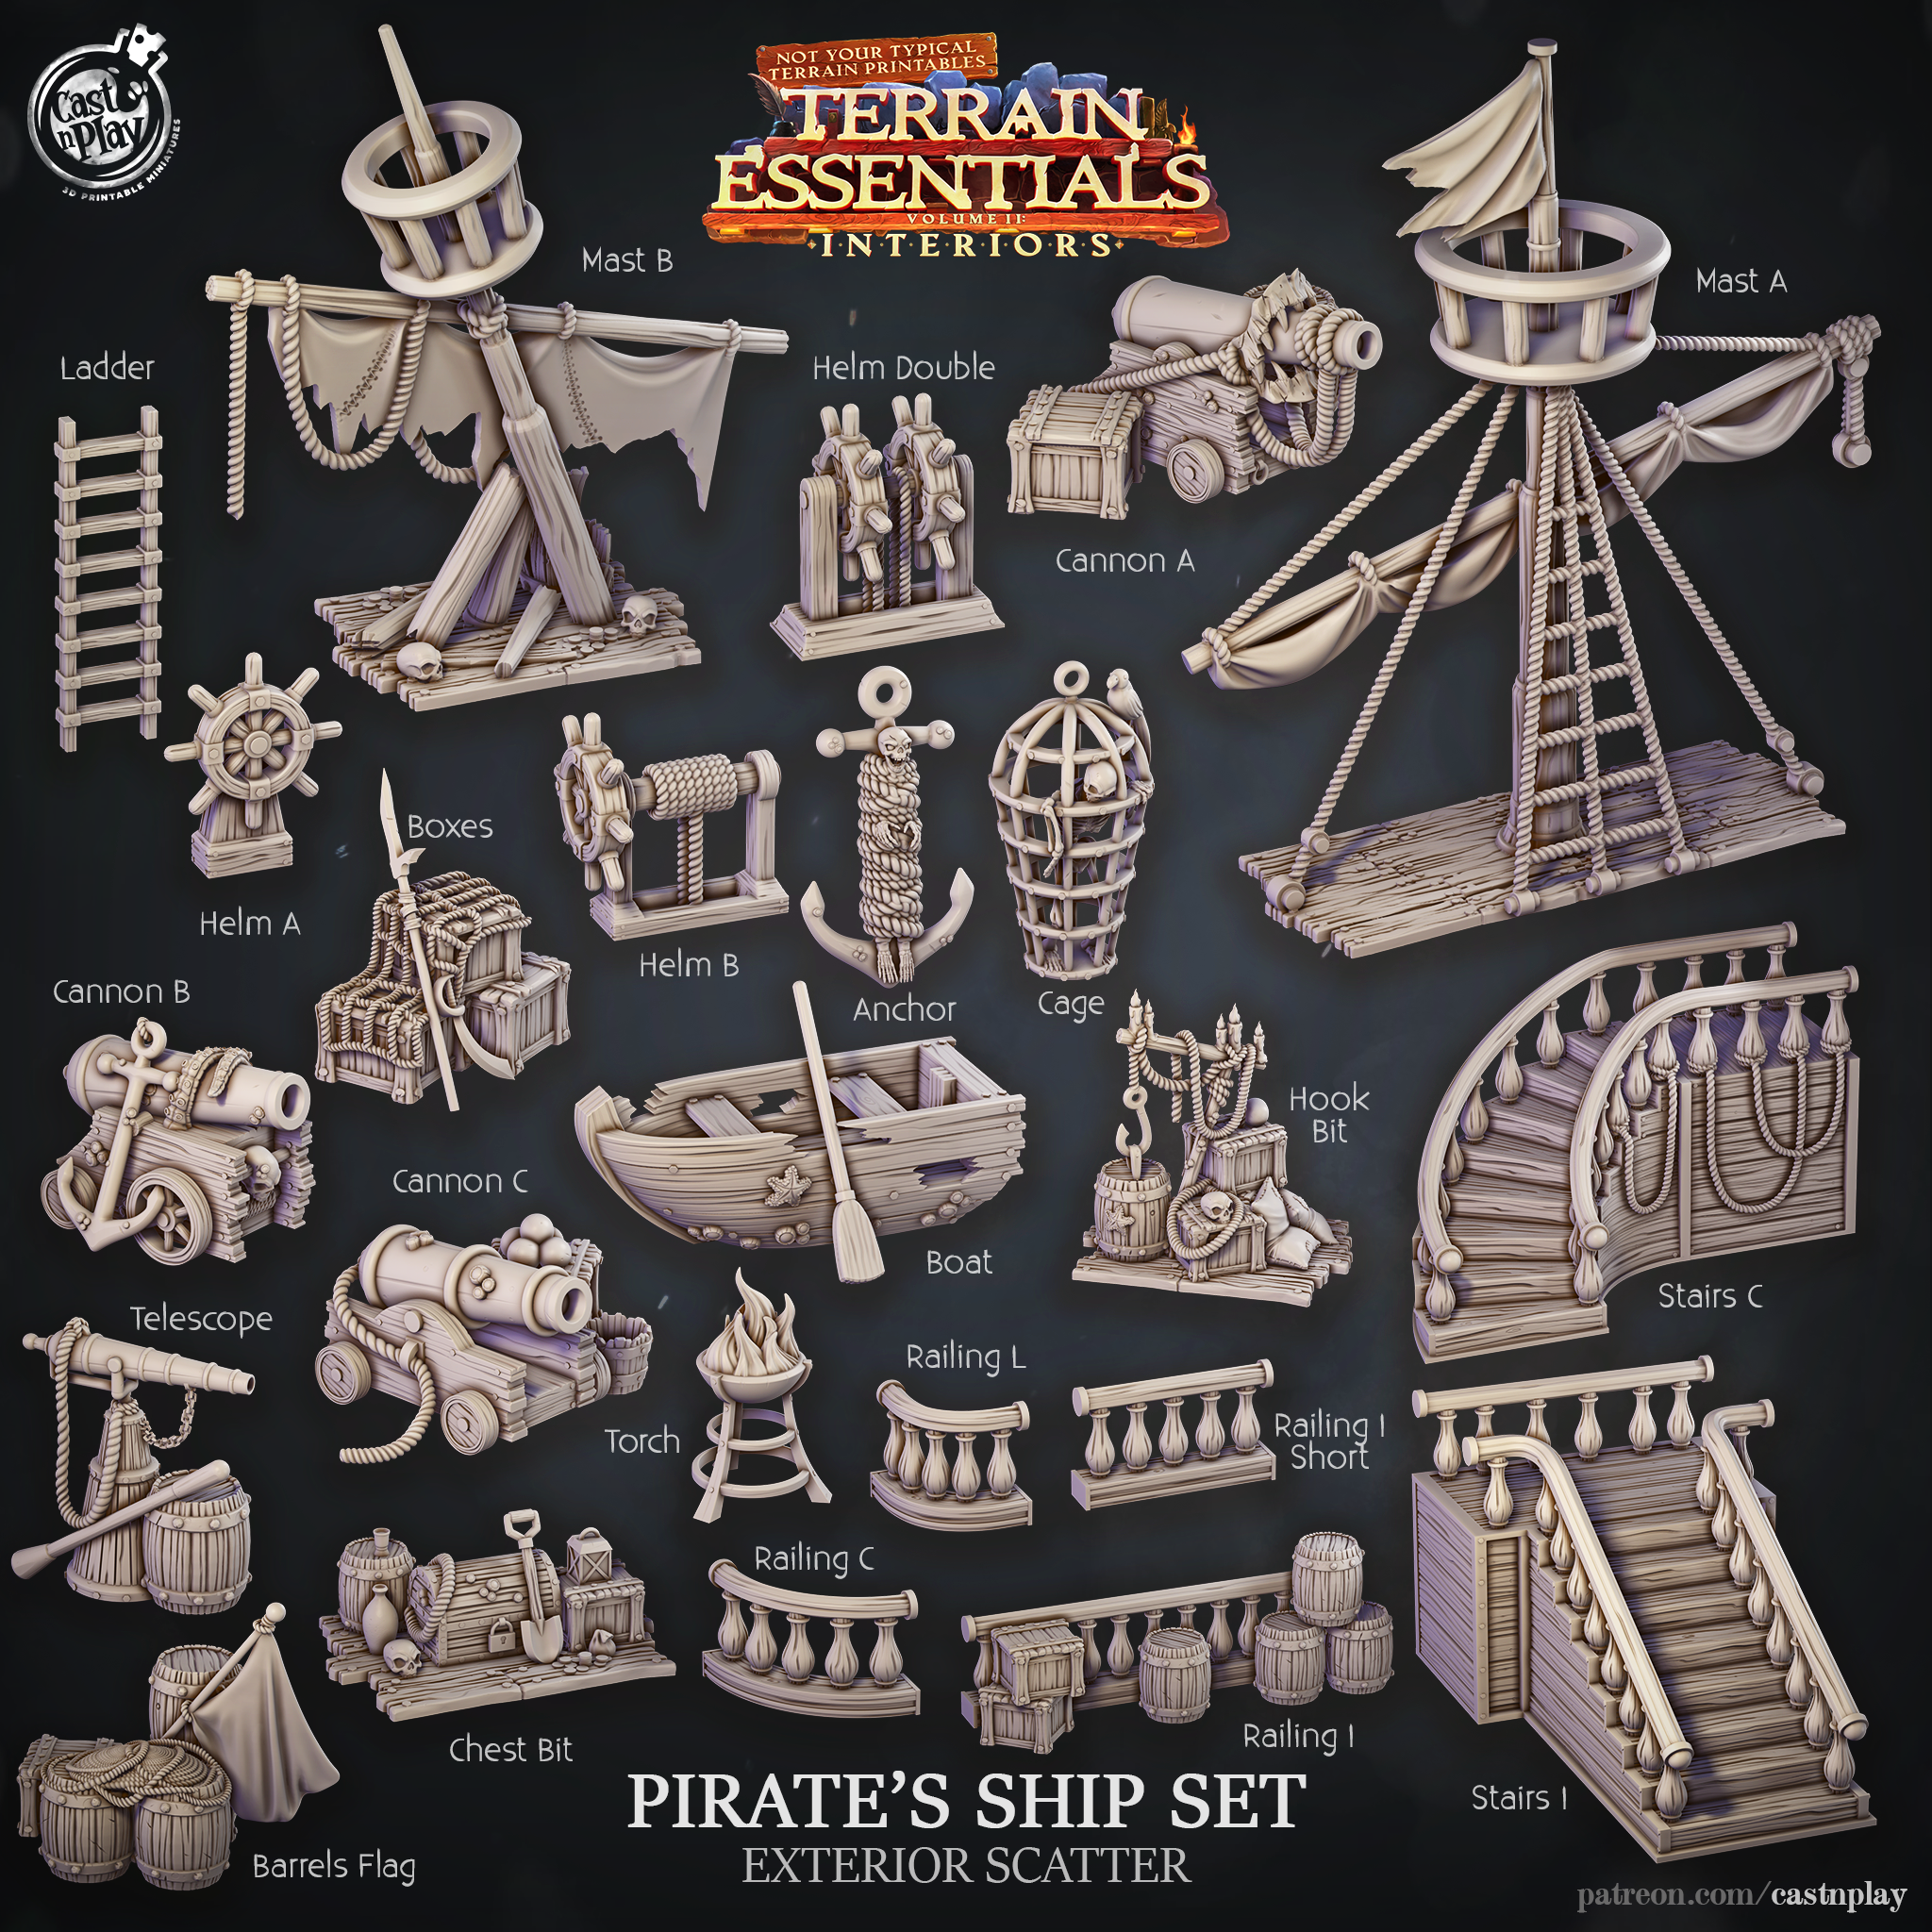 3D Printed Cast Play Pirate Ship Exterior Scatter Terrain Essentials – Charming Terrain